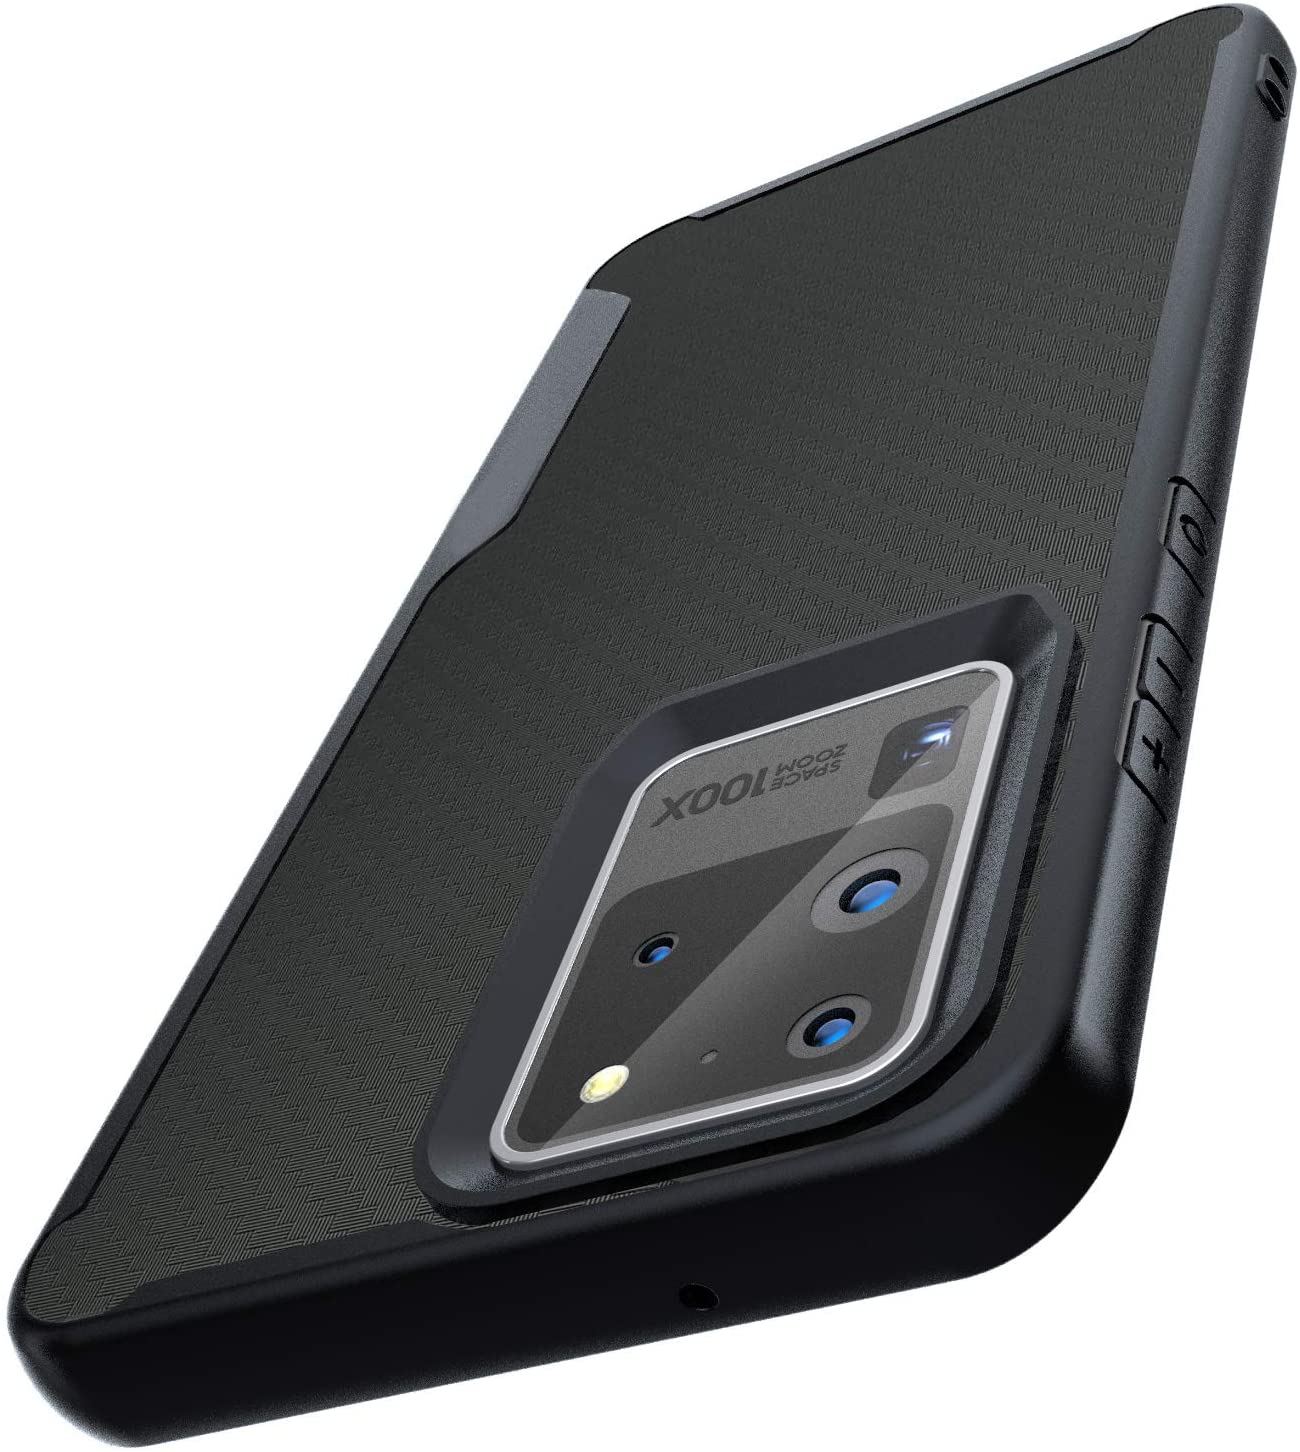 Samsung Galaxy S20 Ultra Kitoo Carbon Fiber Pattern Case Black